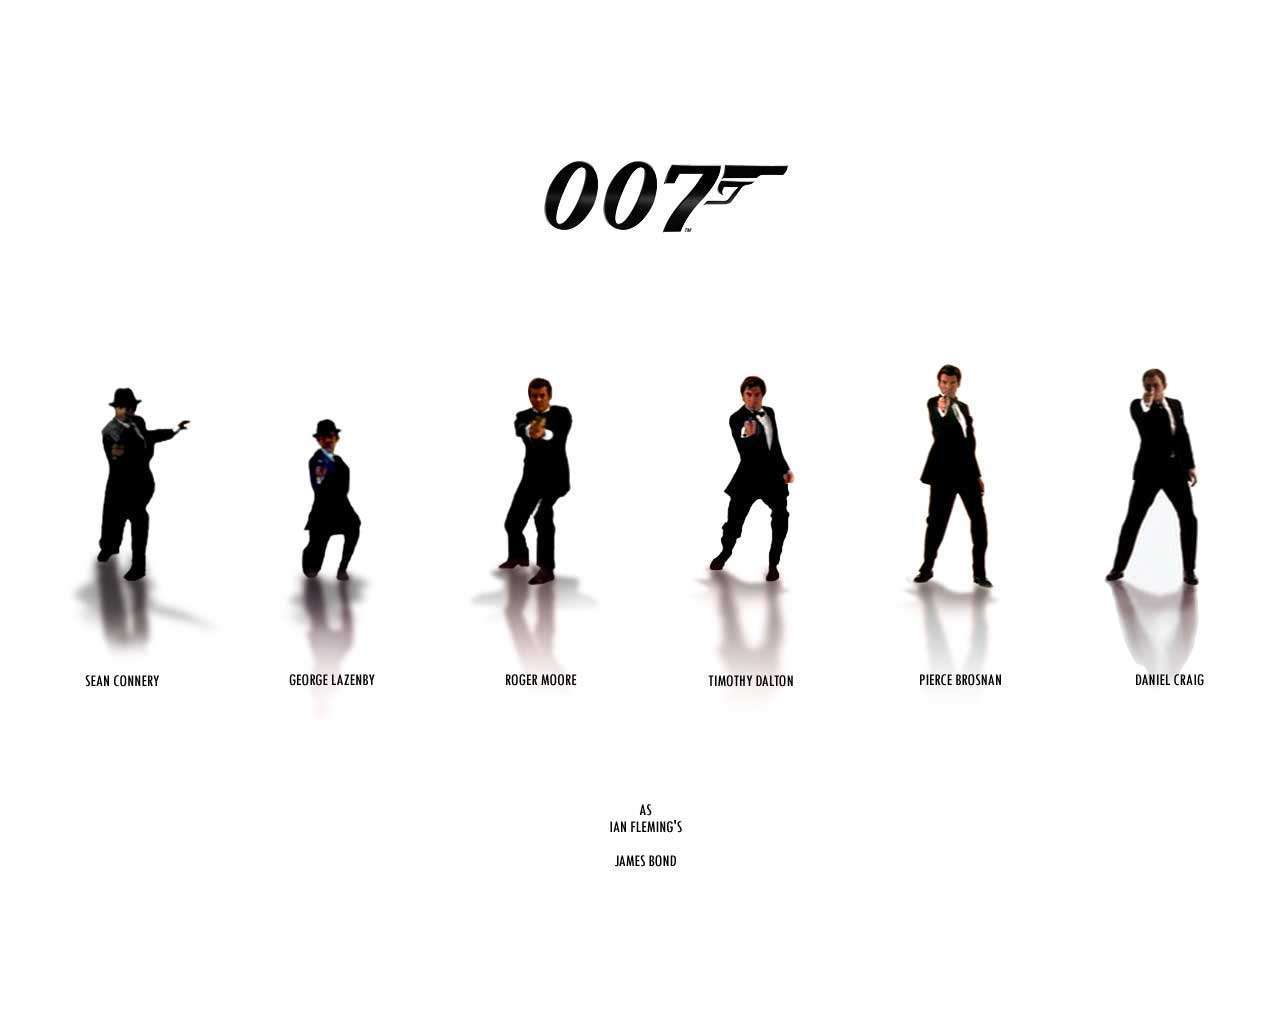 spectre 007. James bond